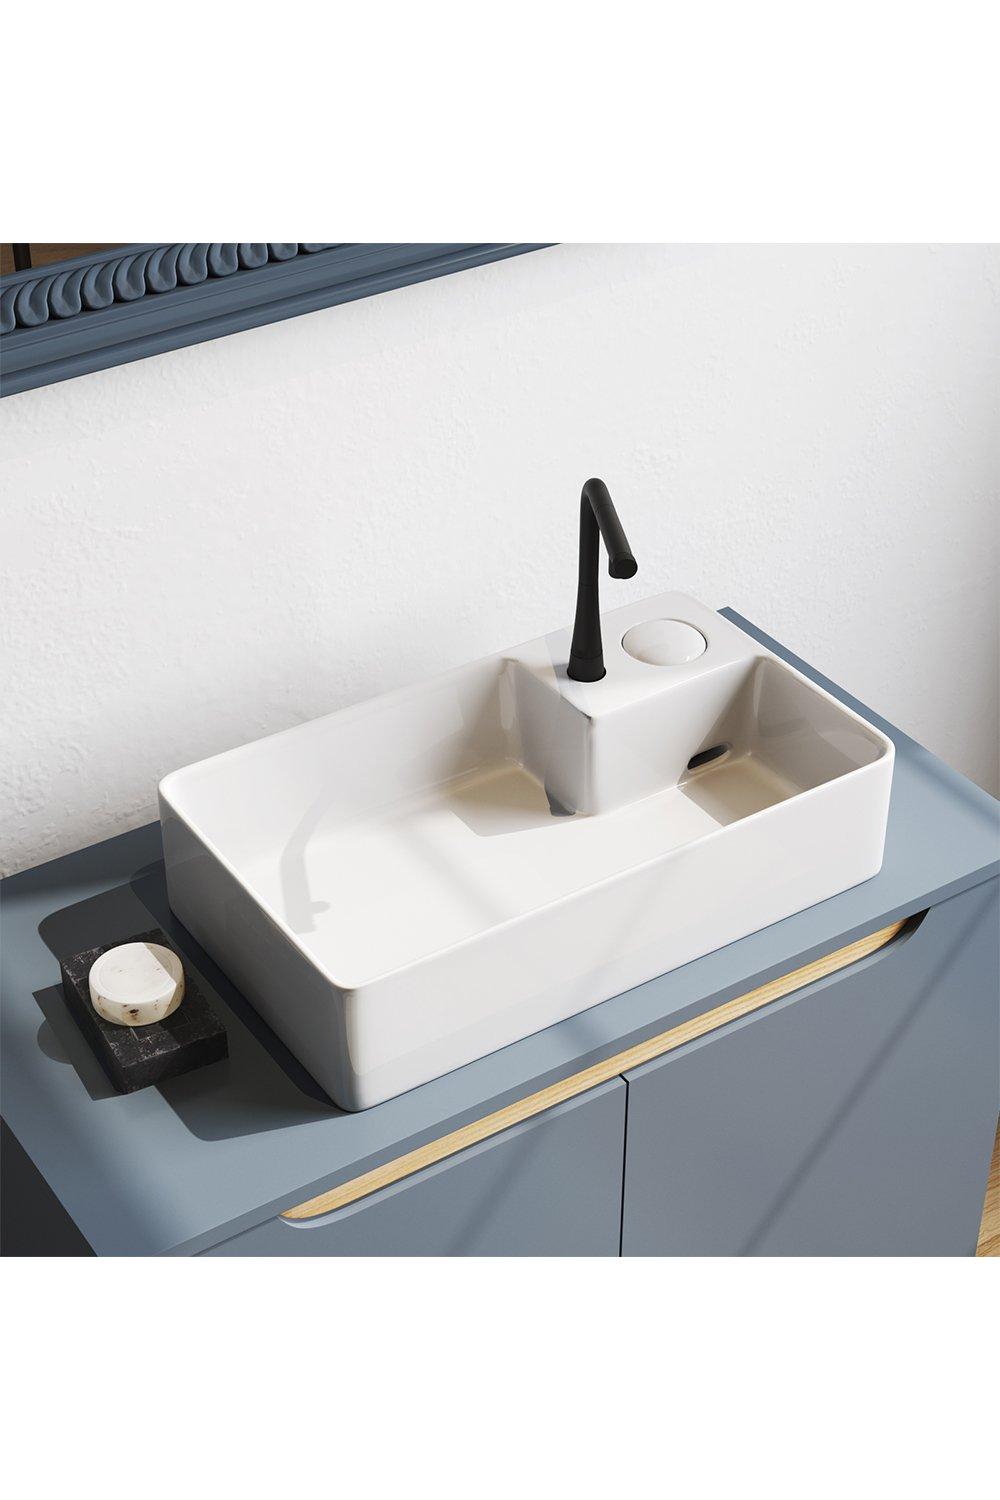 Ceramic Bathroom Sink Countertop Basin with Drain